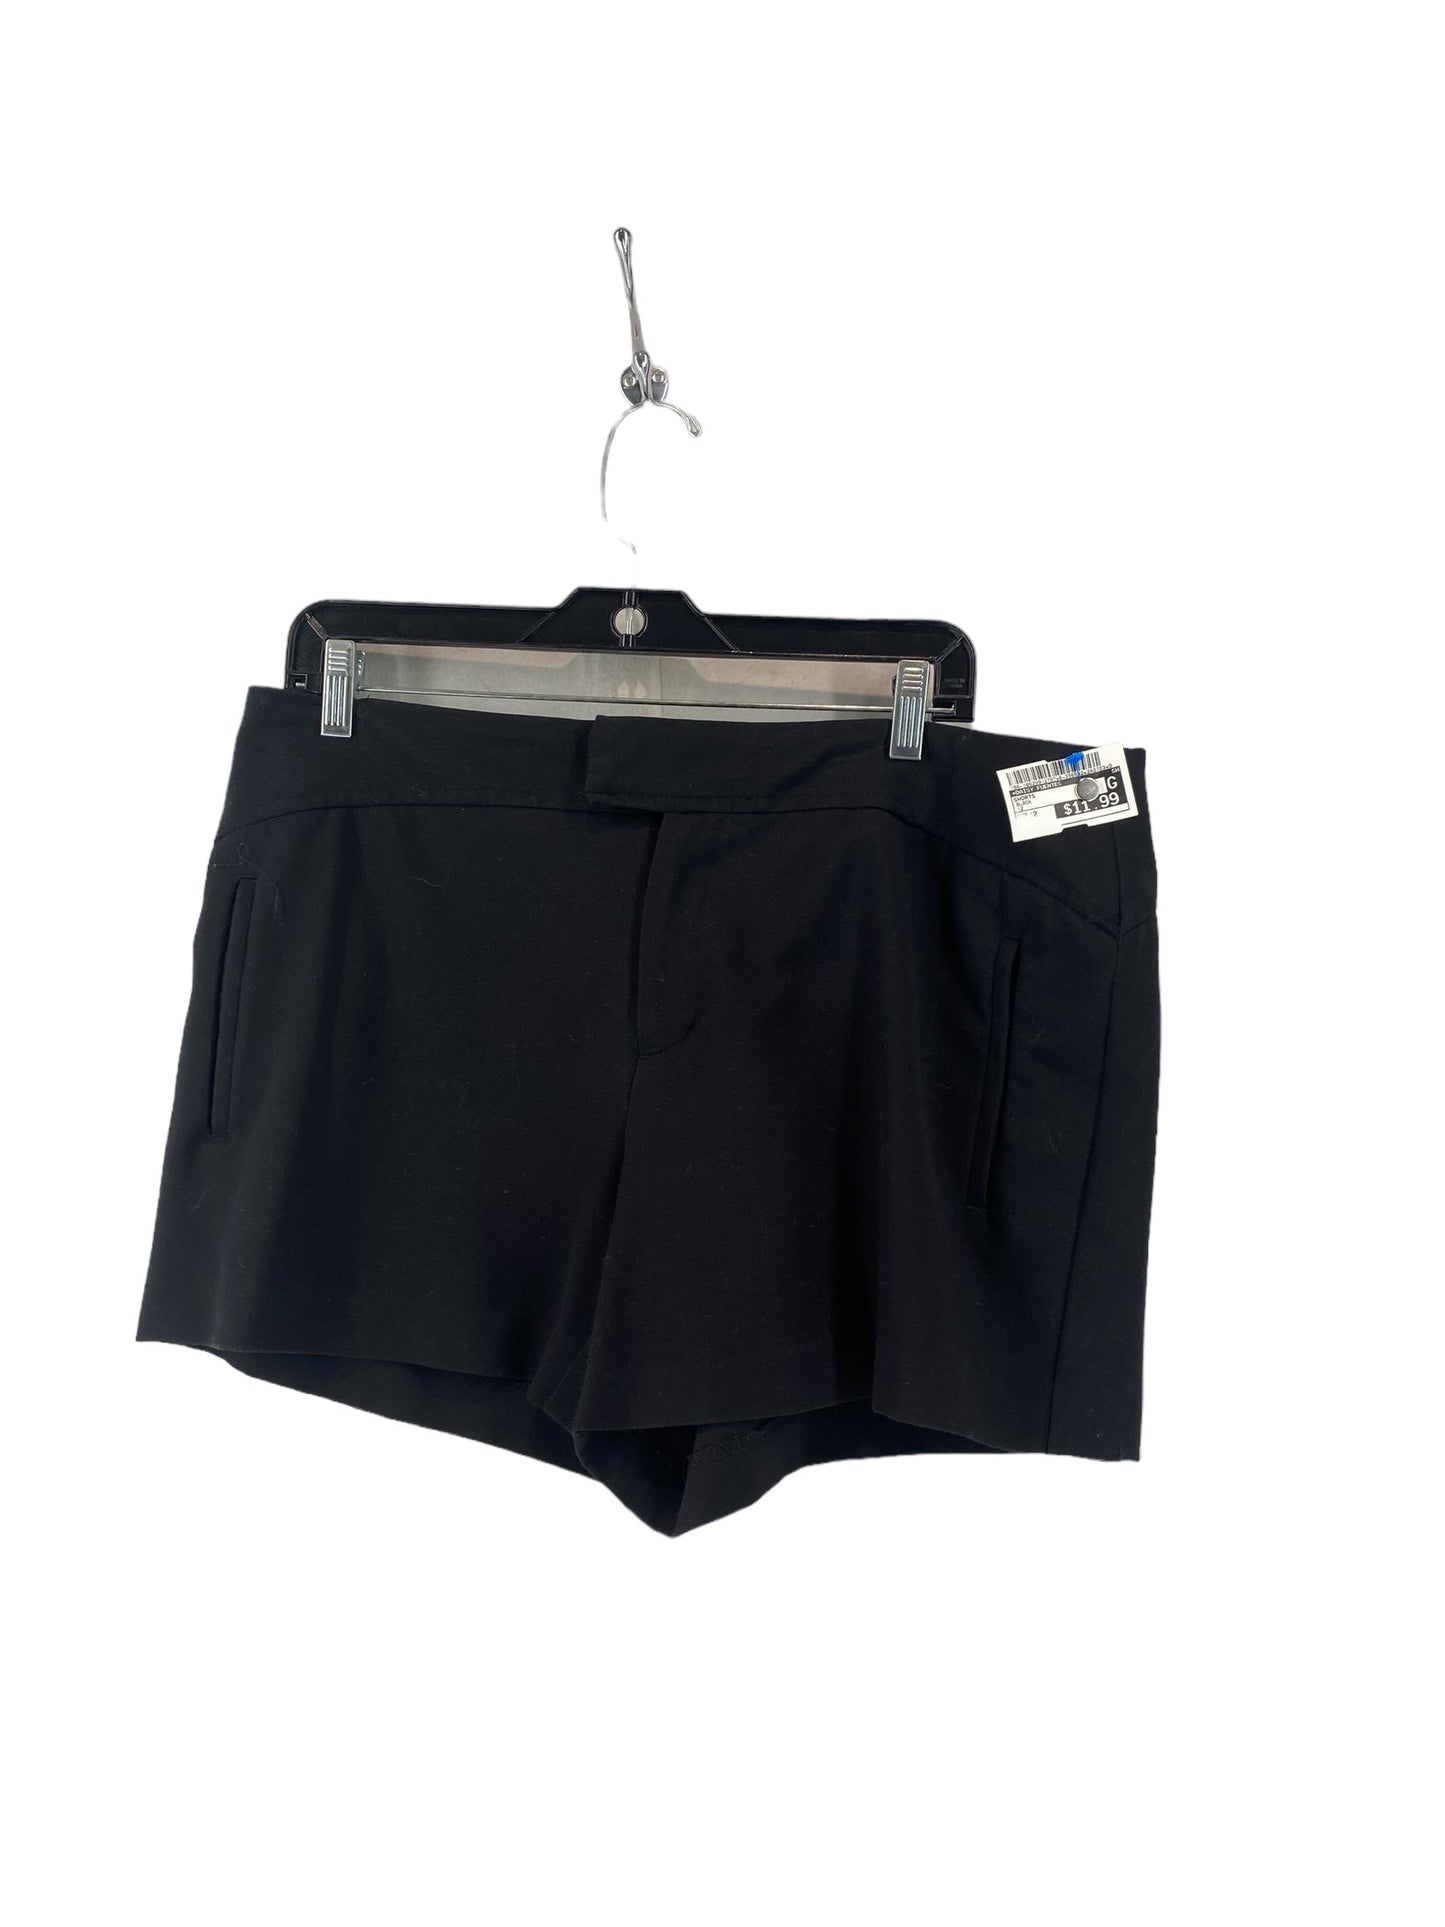 Black Shorts Daisy Fuentes, Size 12